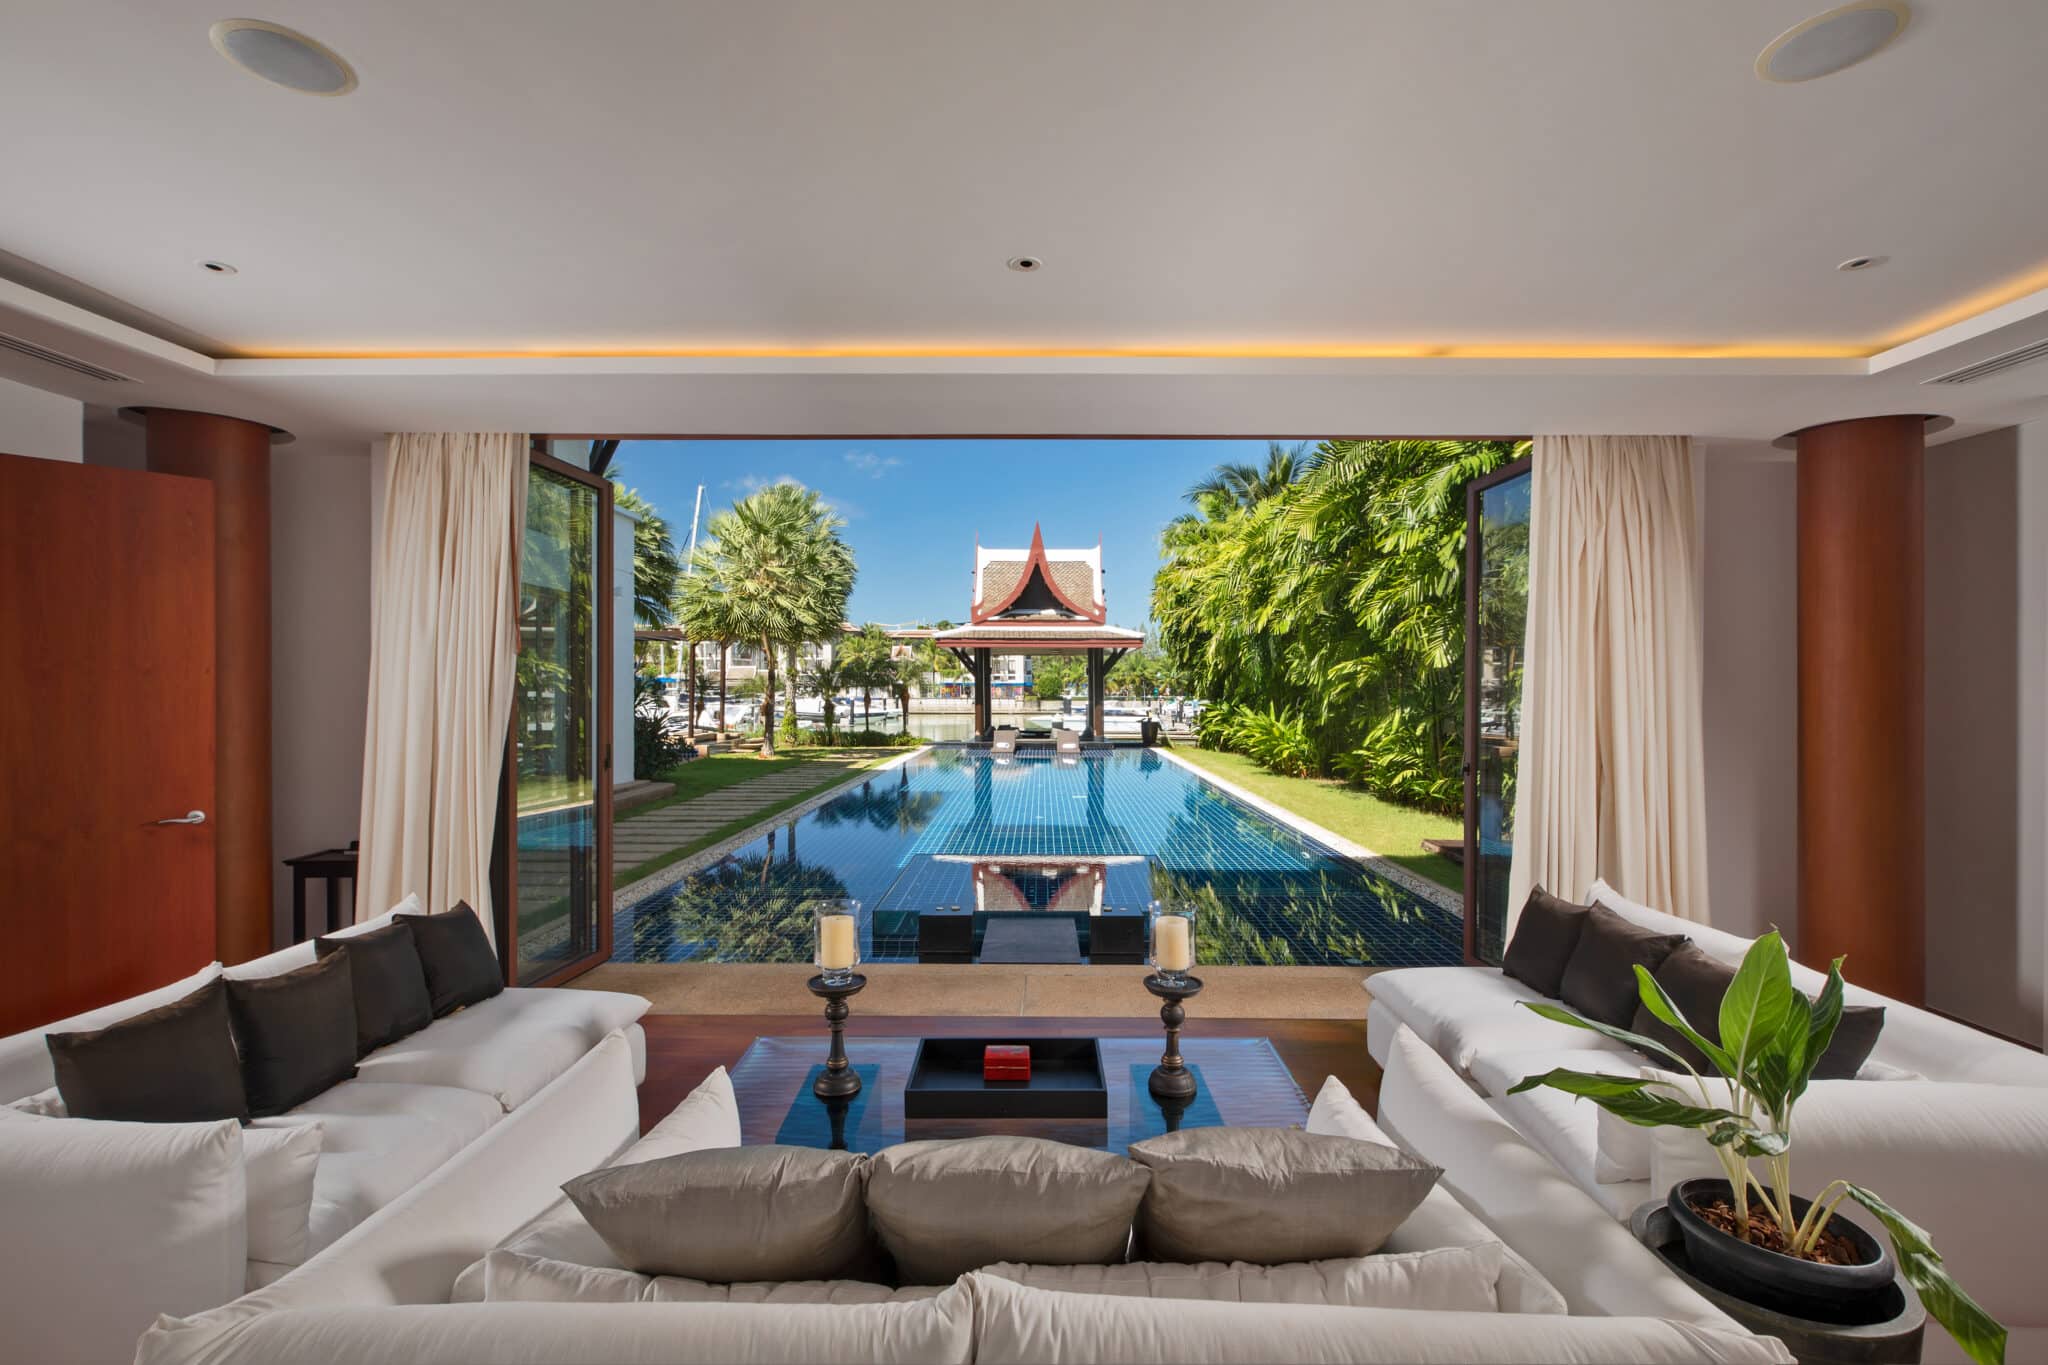 Royal Phuket Marina - The Royal Villa with Private Dock for Rental and Sale